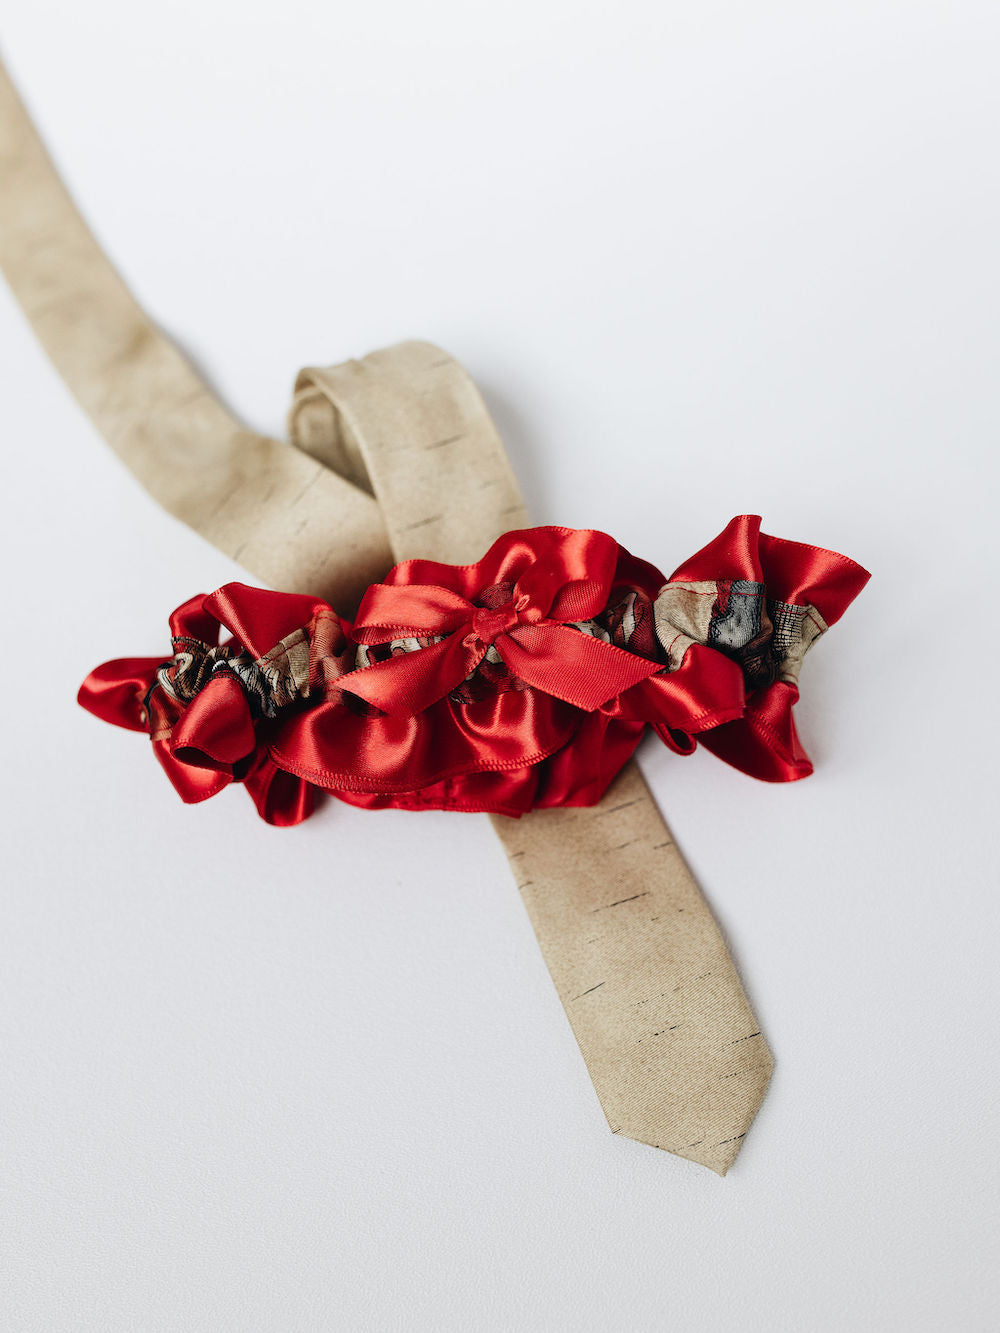 custom main heirloom wedding garter from set handmade from fathers tie by The Garter Girl